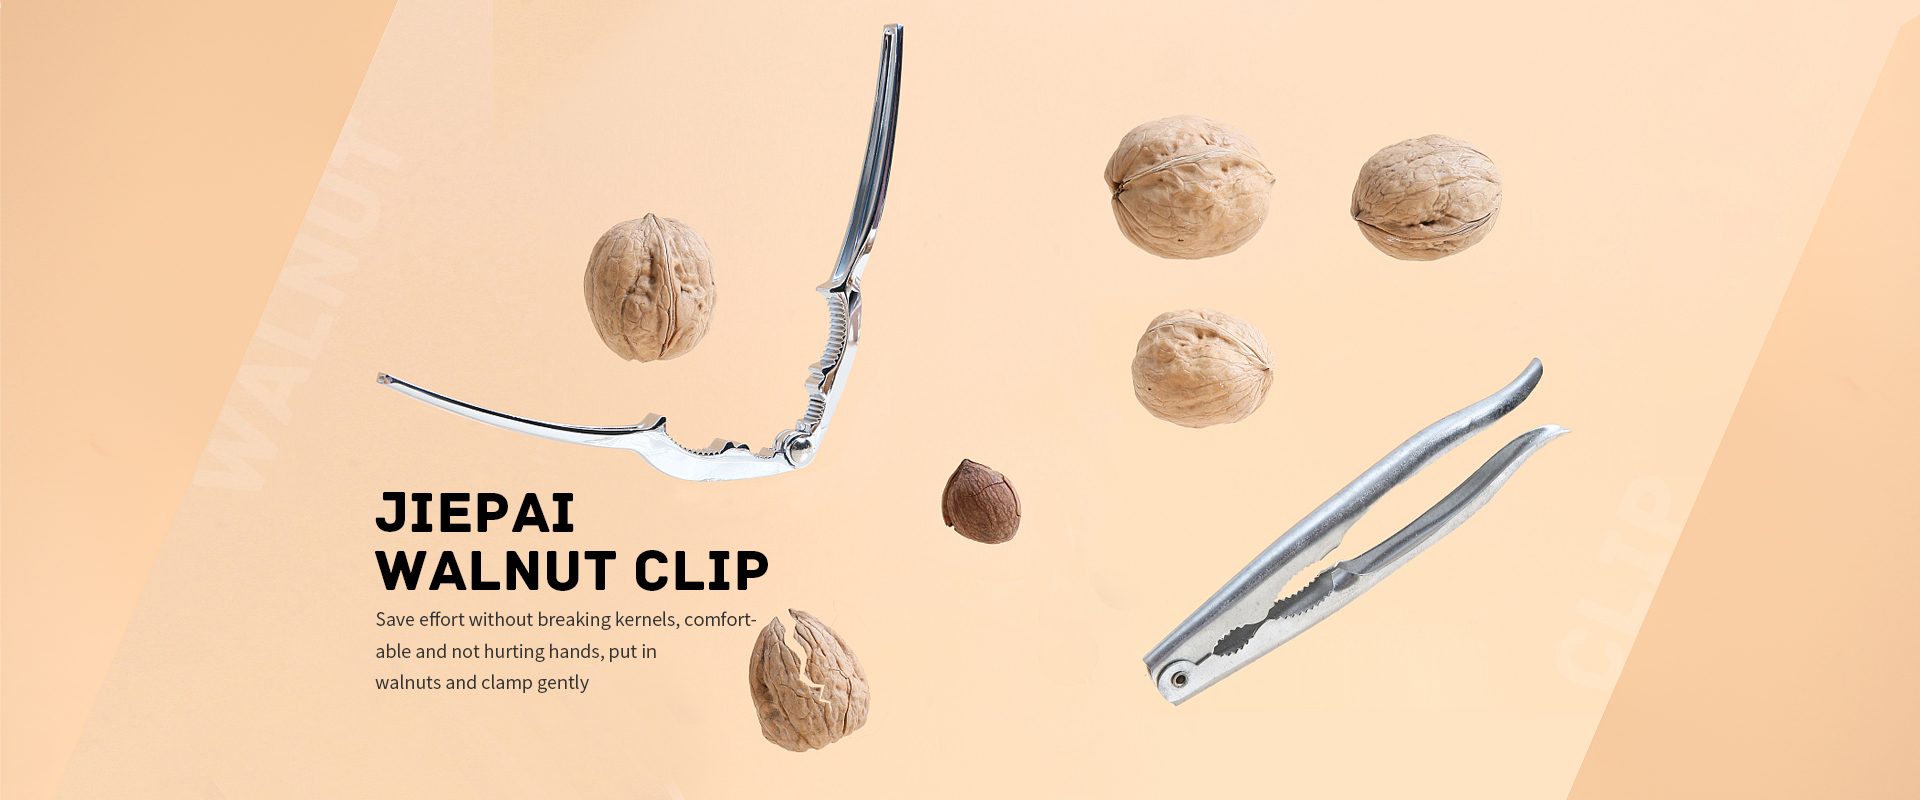 Walnut Clip